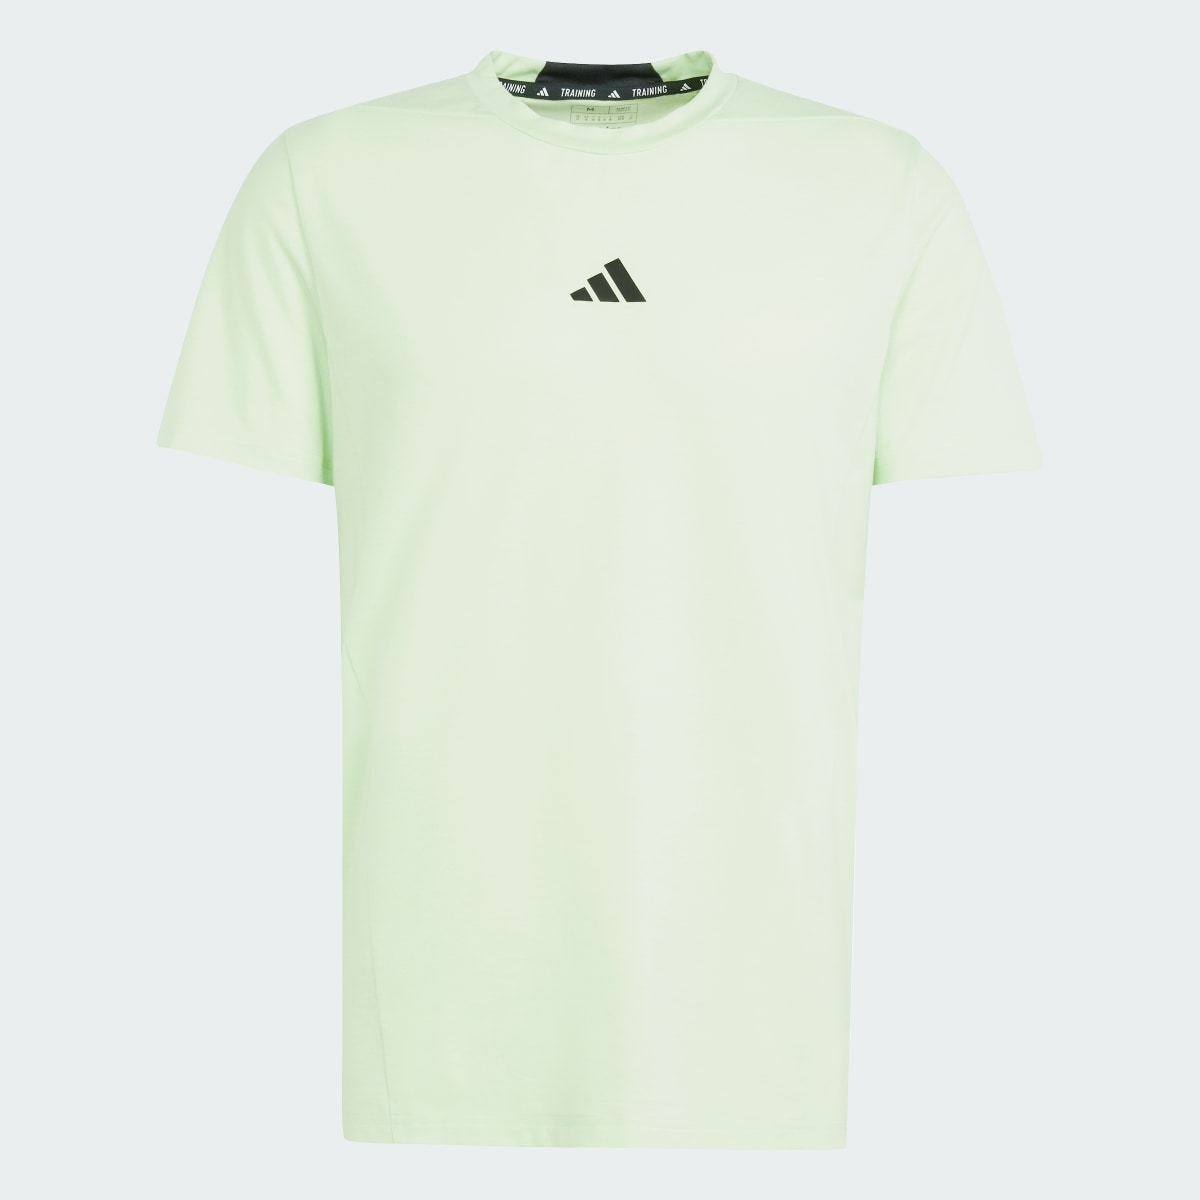 Adidas T-shirt Designed for Training Workout. 5